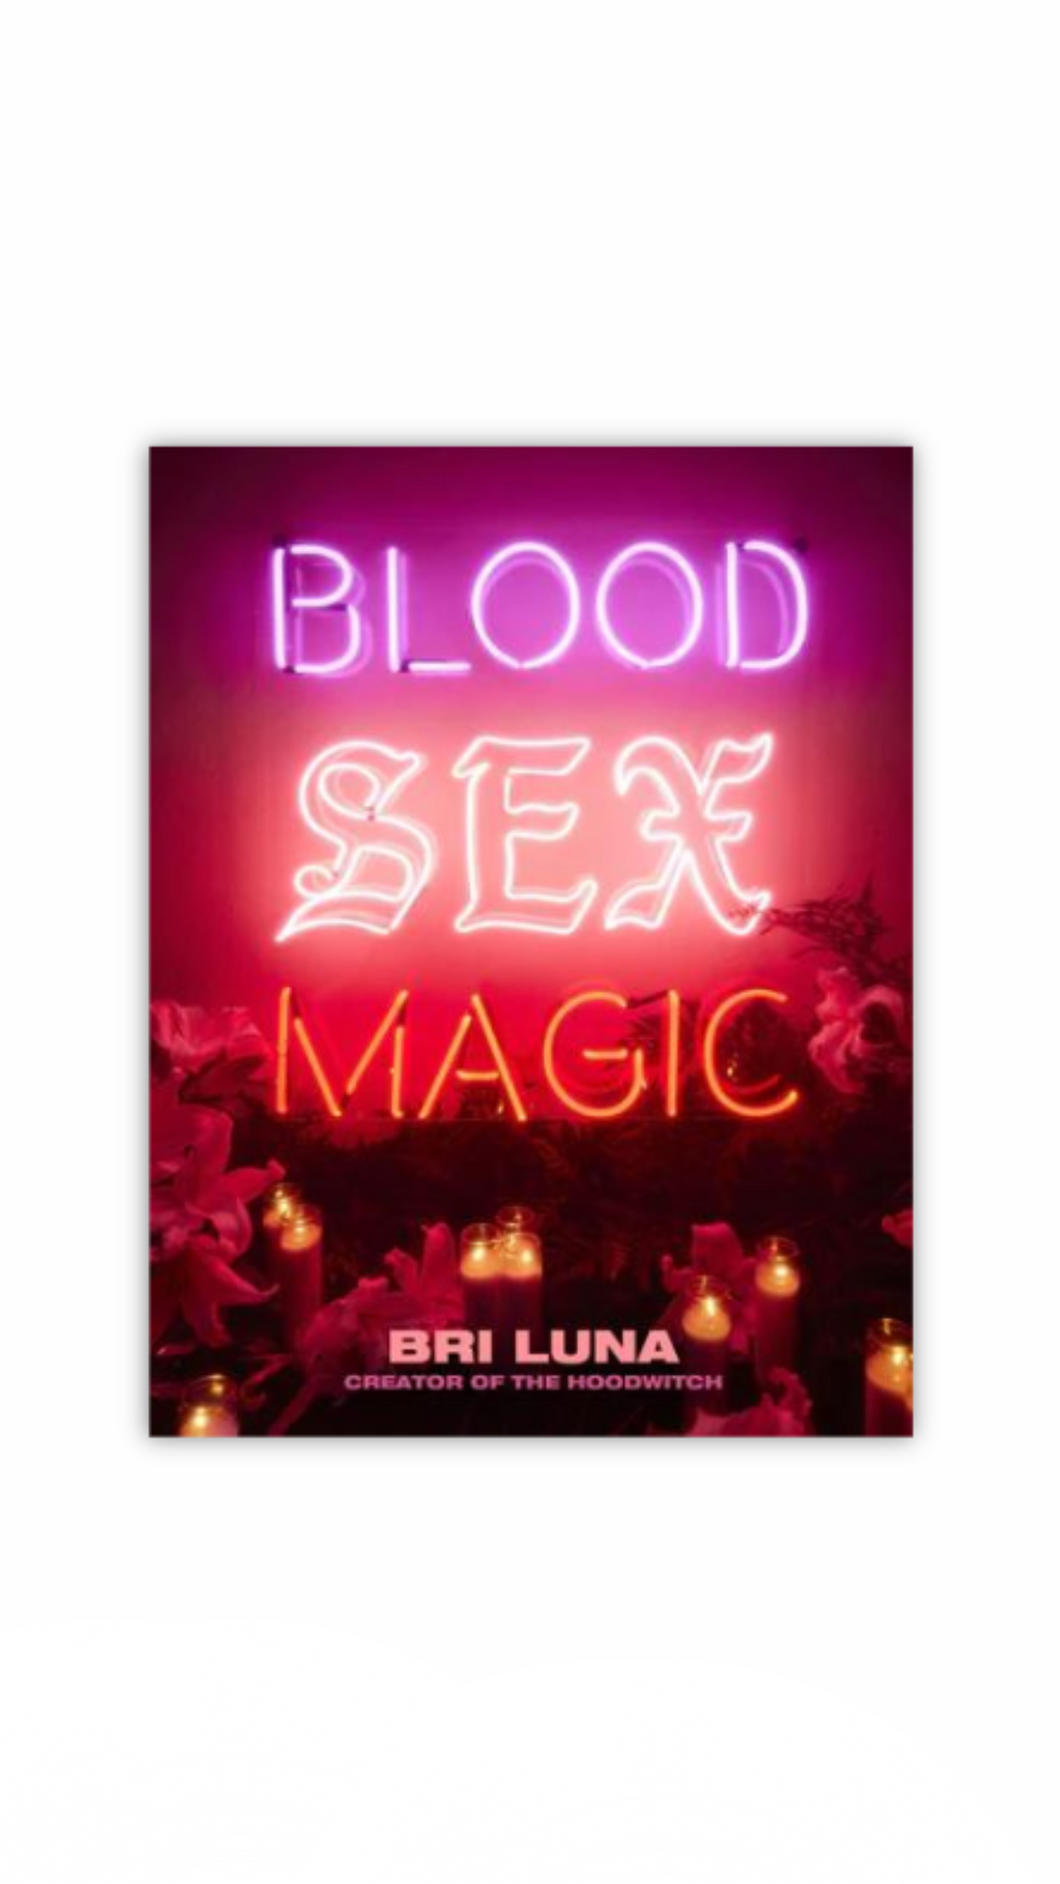 Mar 7, 'Blood Sex Magic' with Hoodwitch Bri Luna